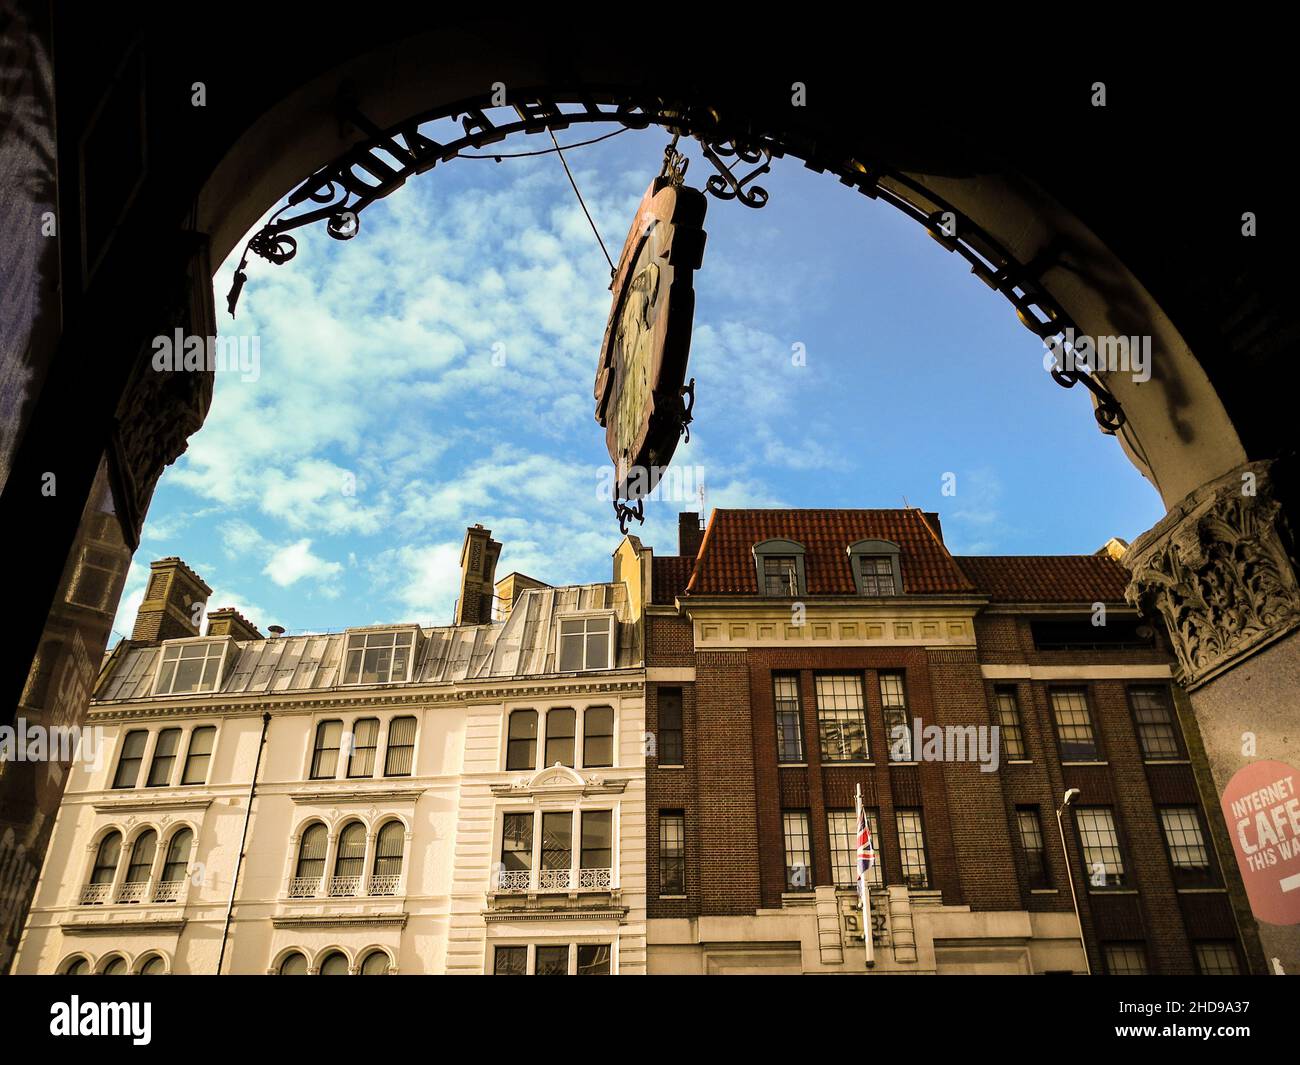 Entrance signage above the Old King's Head public house on Borough High Street, Southwark, London, SE1, UK Stock Photo